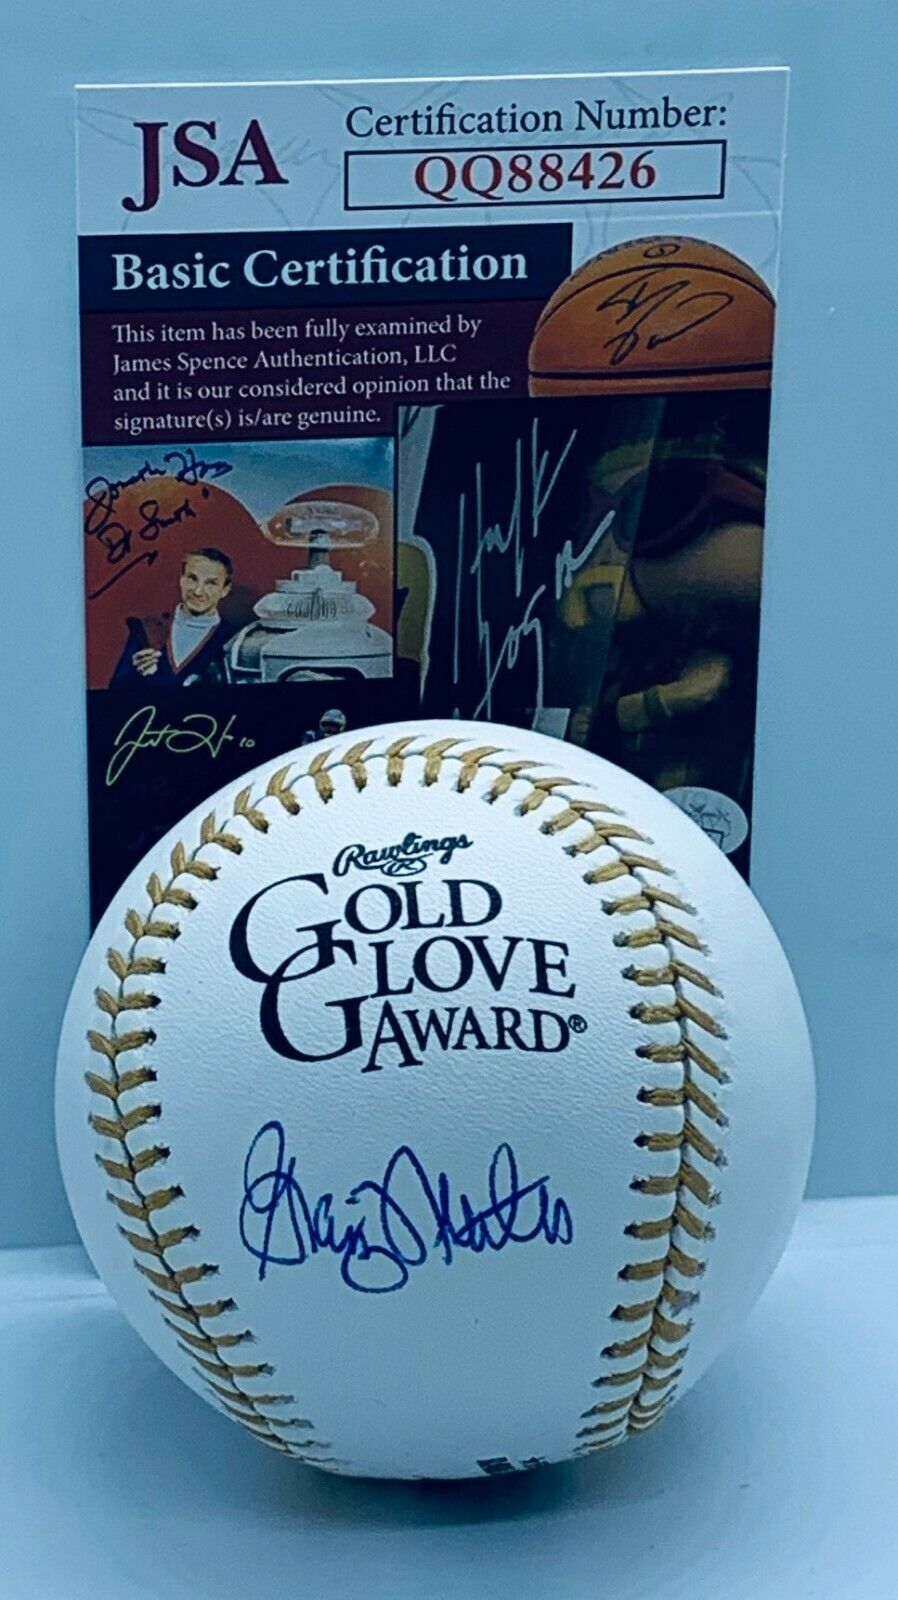 Graig Nettles New York Yankees Signed Autographed Gray Custom